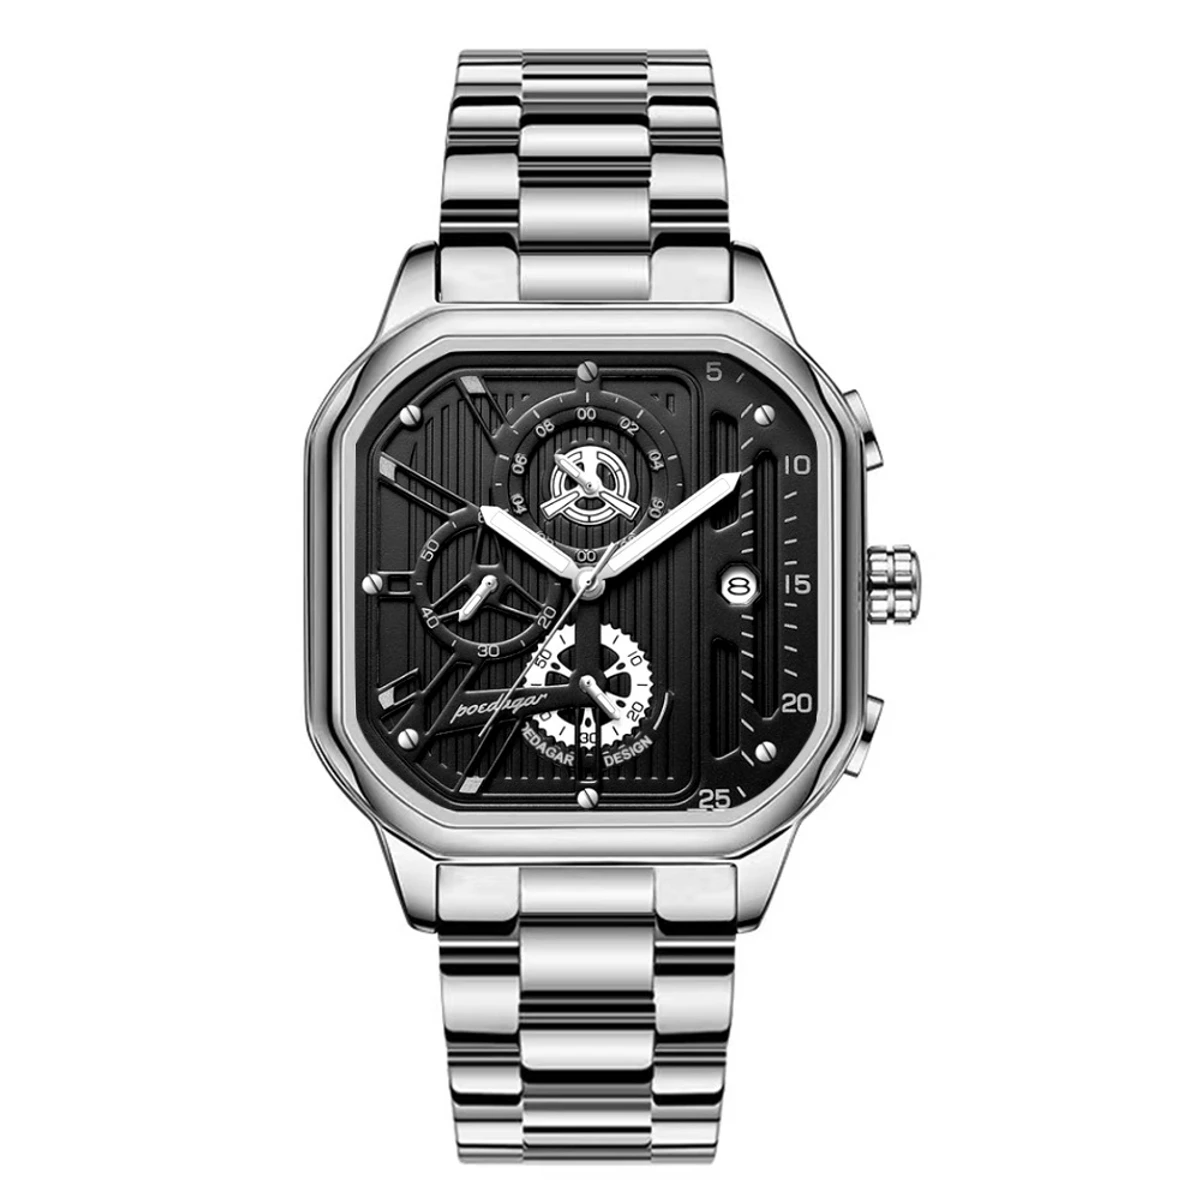 POEDAGAR 628 Luxury Casual Male Watch Fashion Chronograph Stainless Steel Waterproof Luminous Men's Wristwatches Gifts